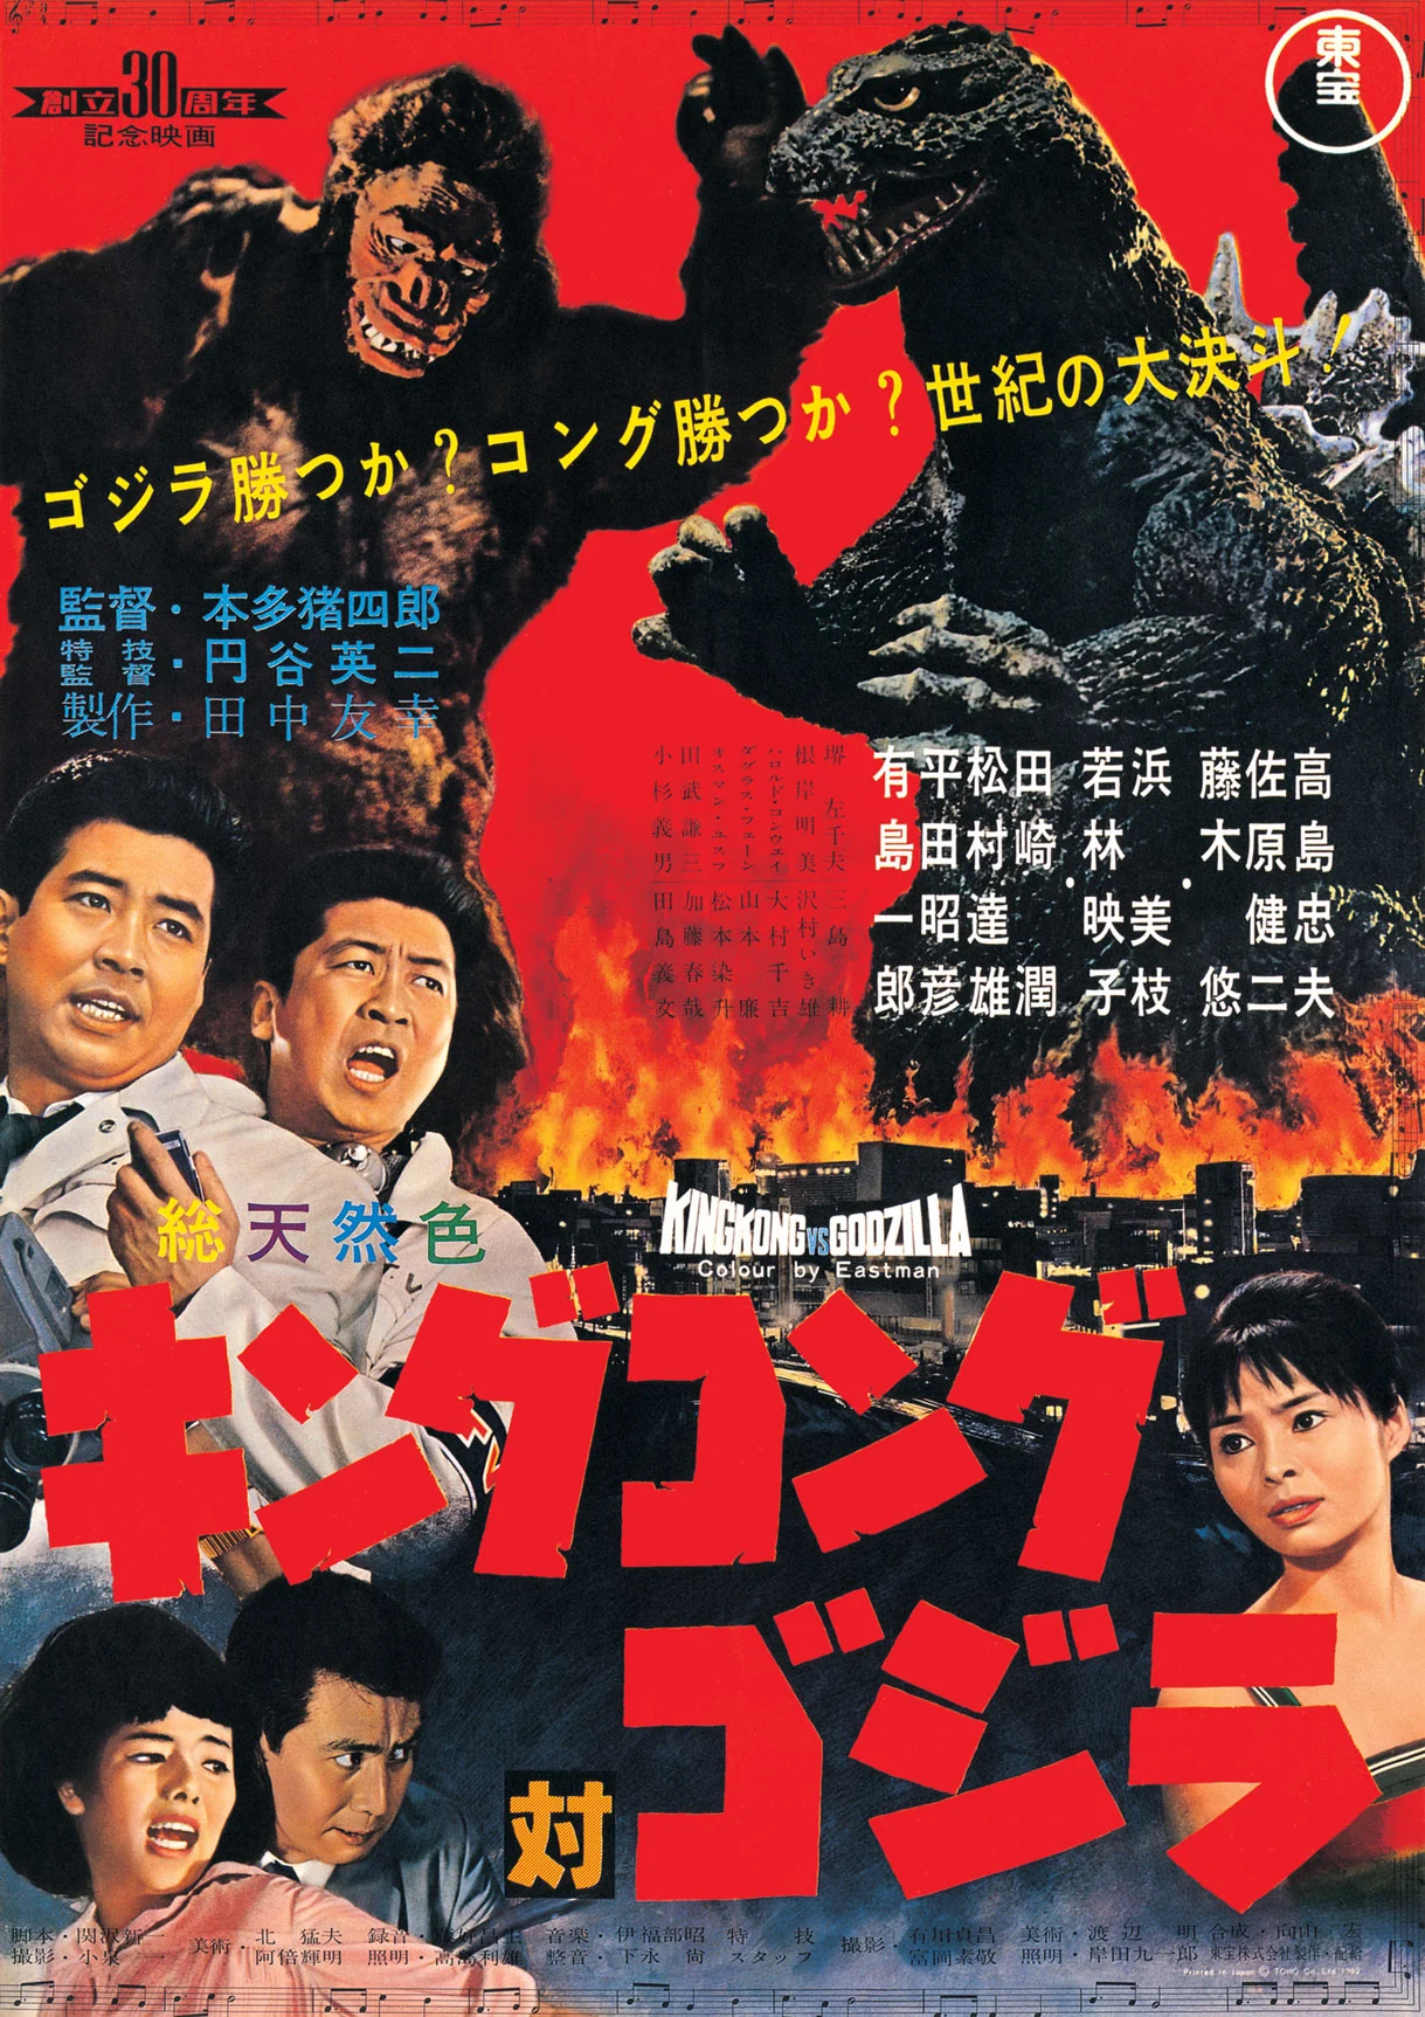  GODZILLA AGAINST MECHAGODZILLA (DVD) Japanese movie (Region 3  HK version) (NTSC) (English subtitled) : Movies & TV